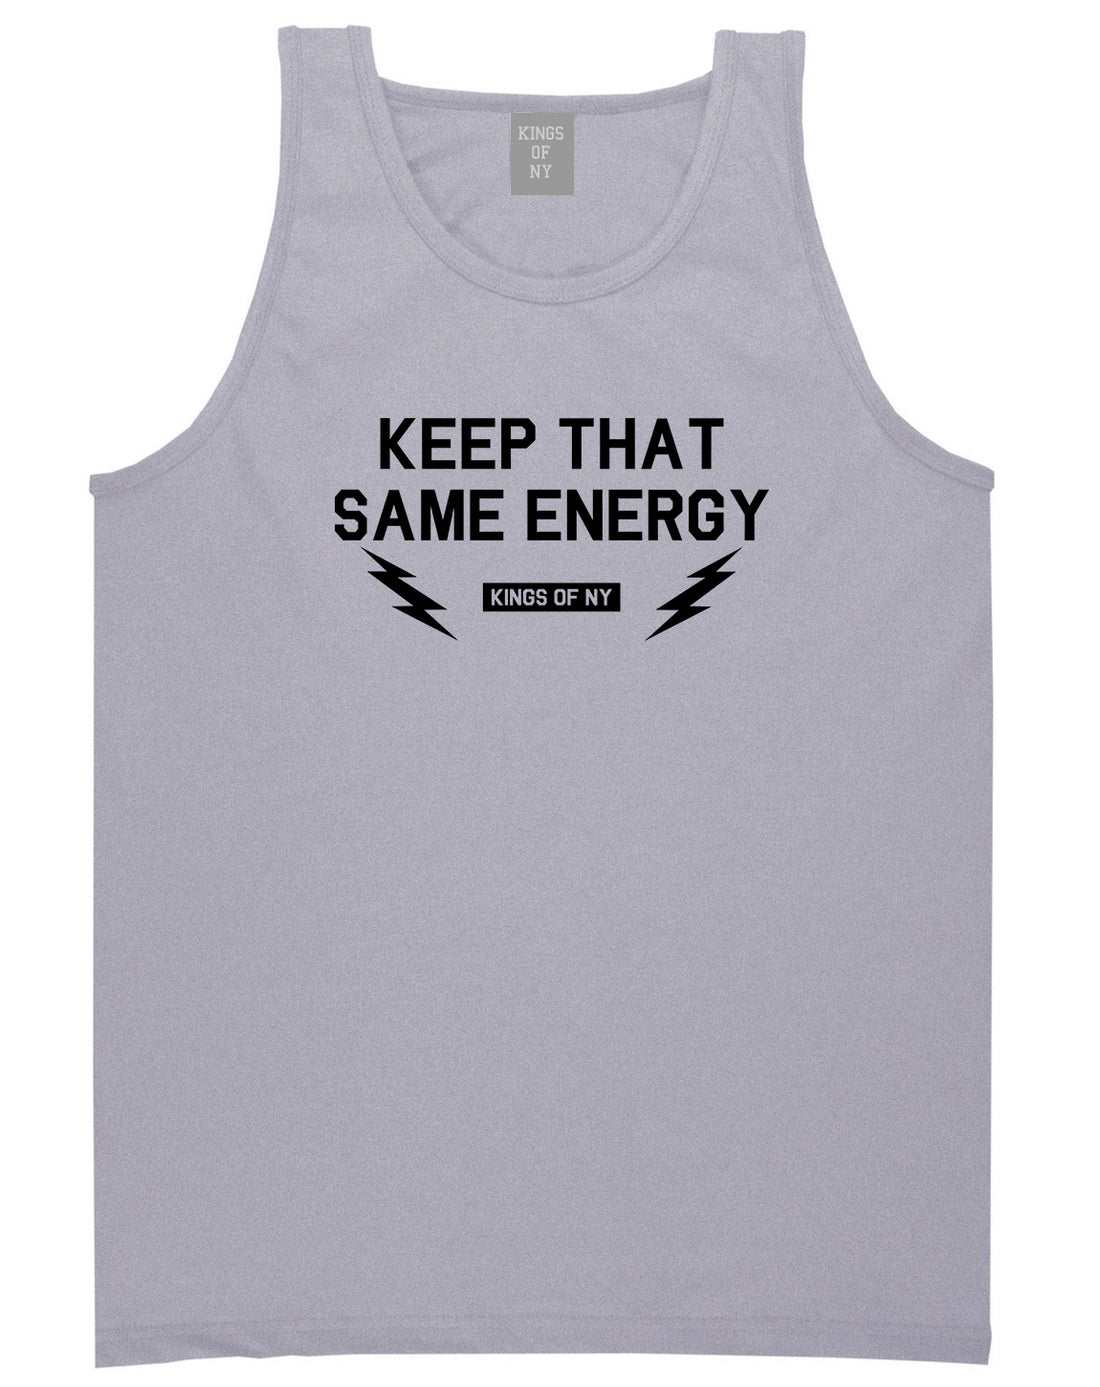 Keep That Same Energy Mens Tank Top Shirt Grey